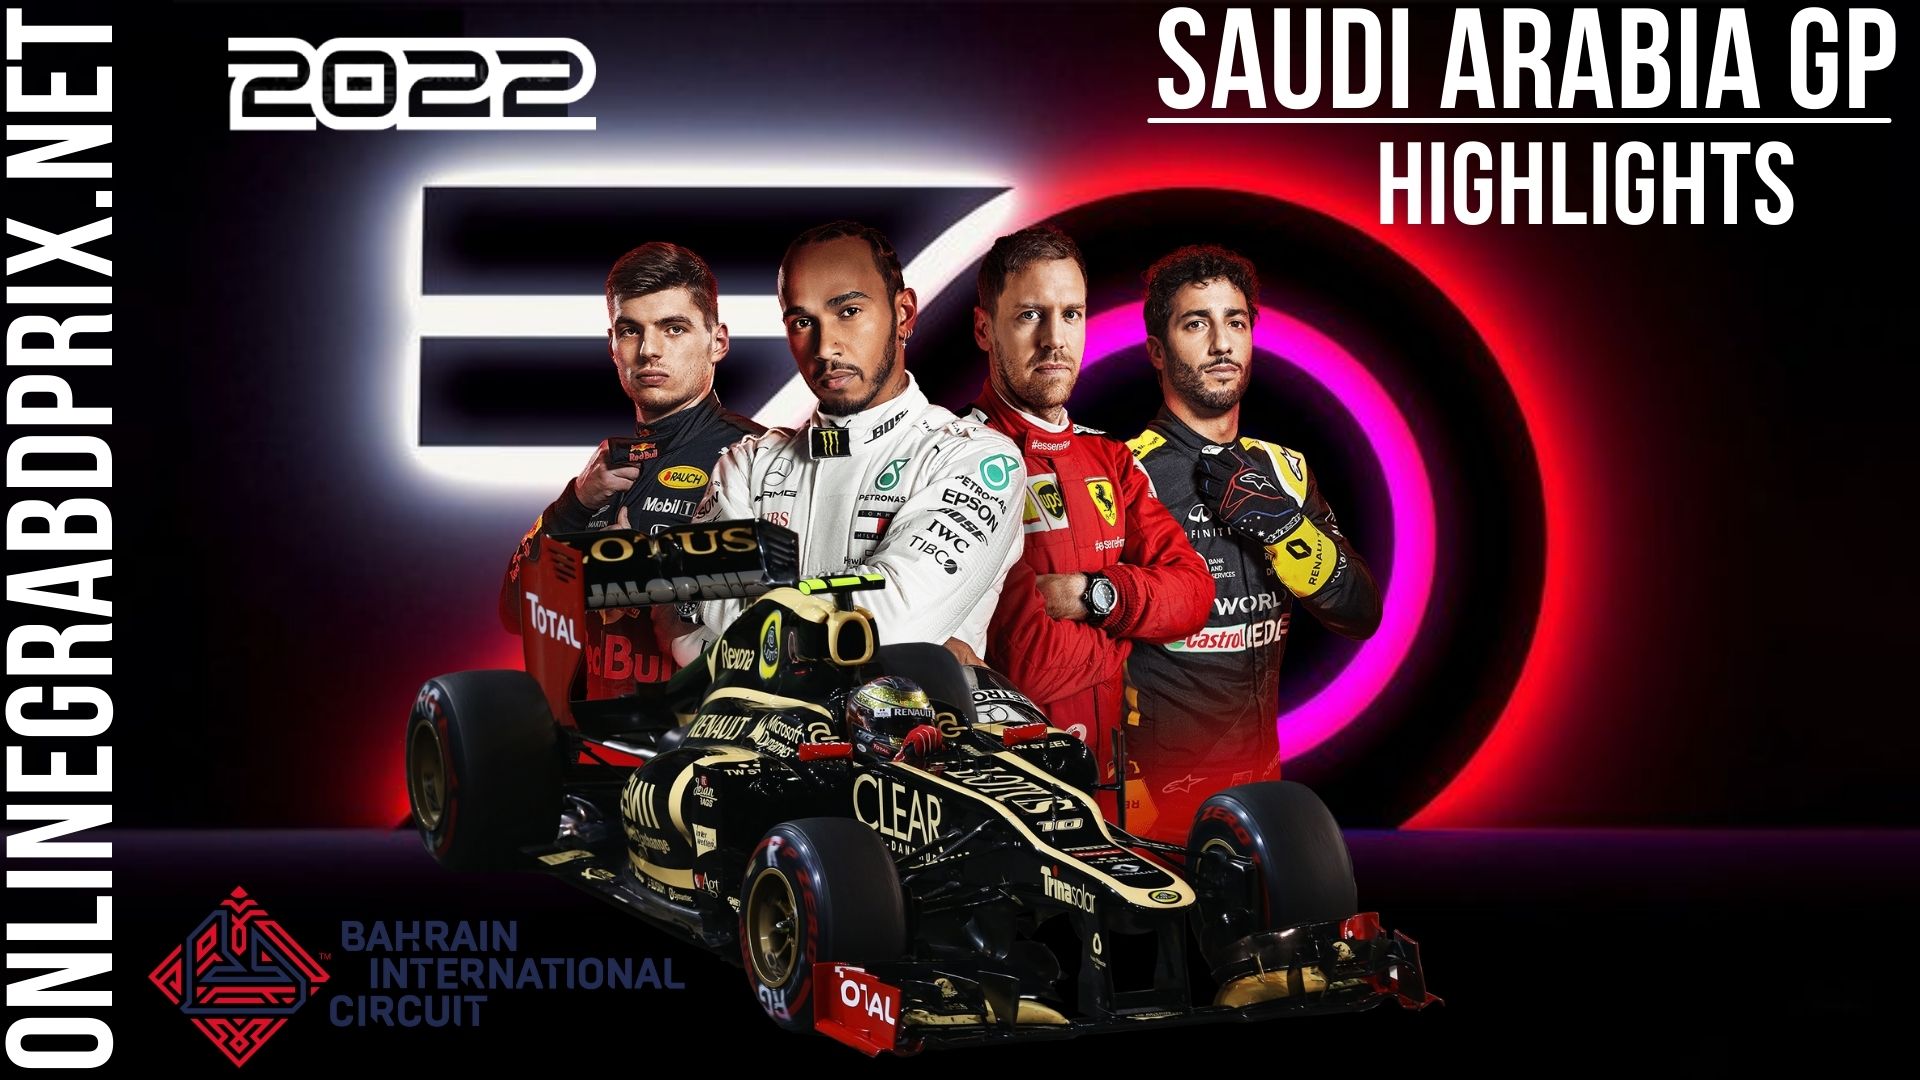 Saudi Arabia GP F1 Highlights 2022